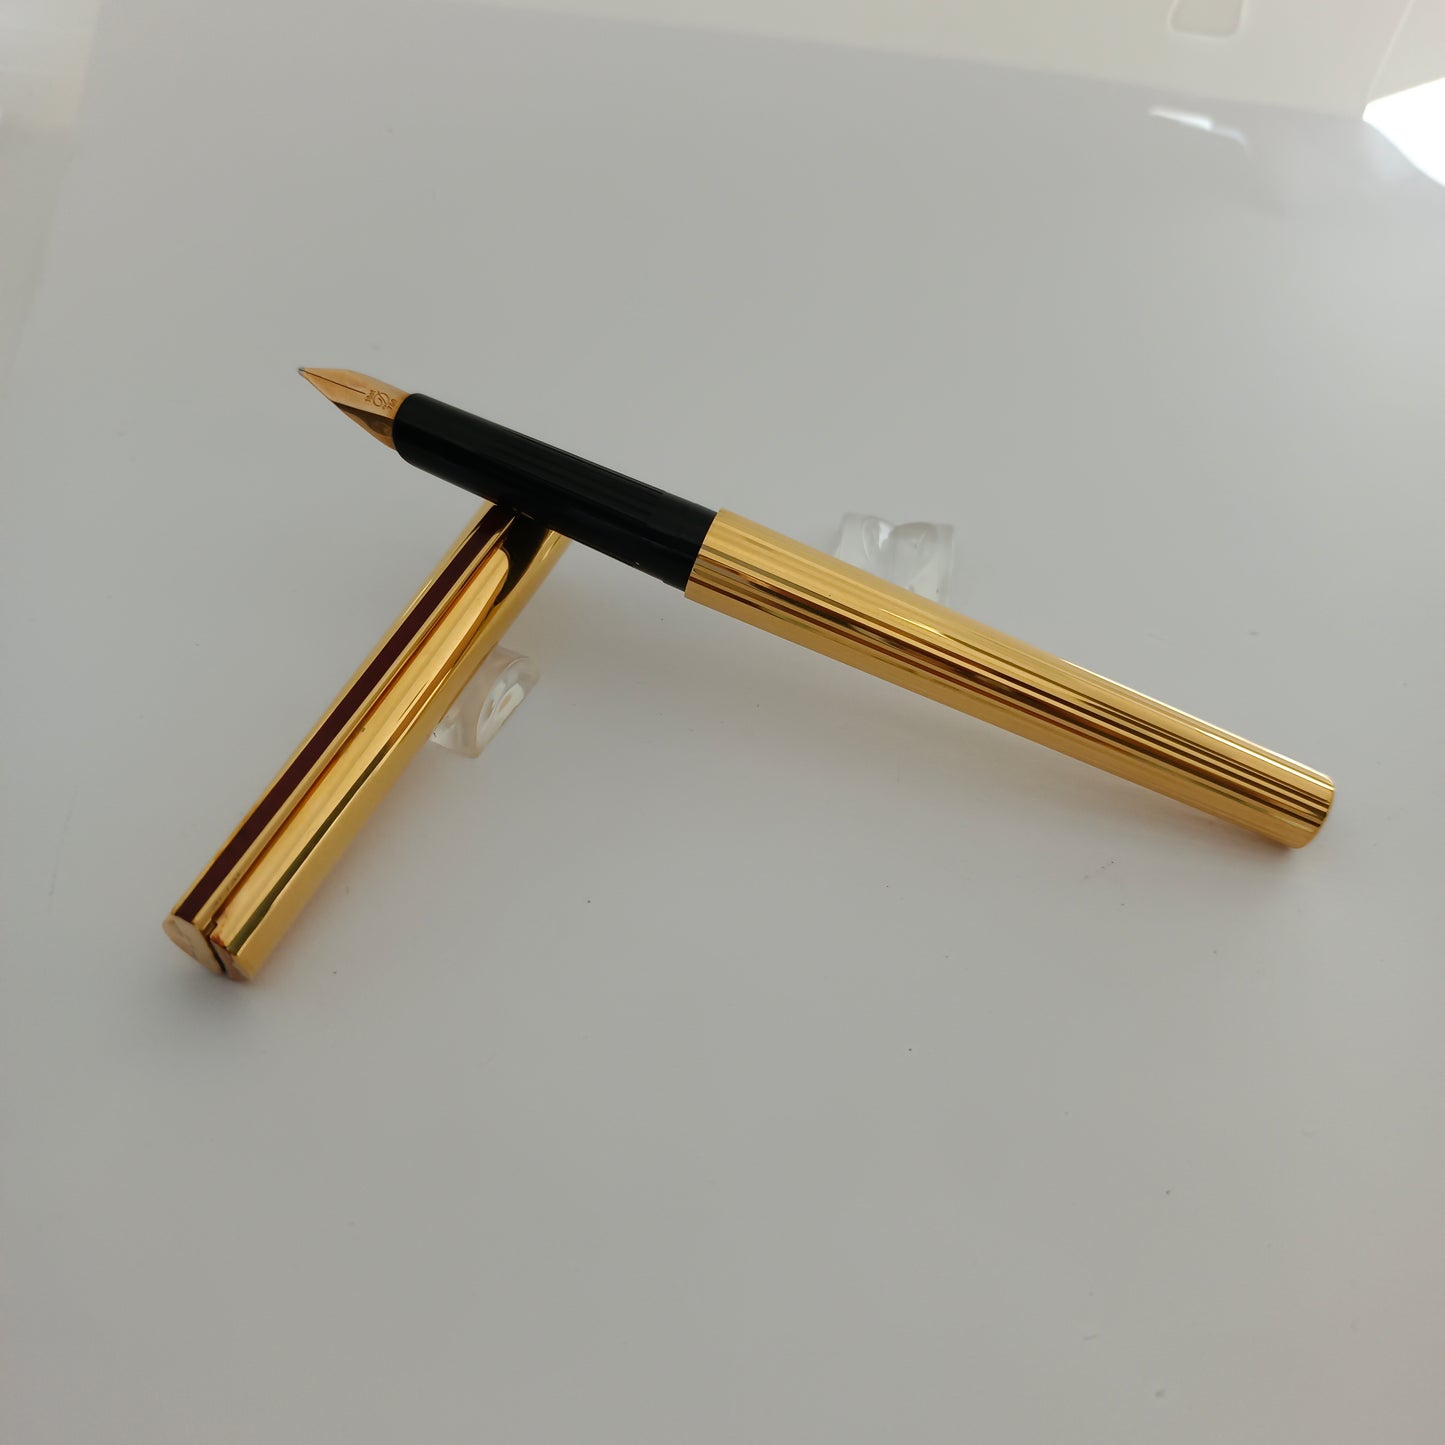 S.T Dupont 925 Vermeil Fountain Pen 18kt 750 Gold Nib